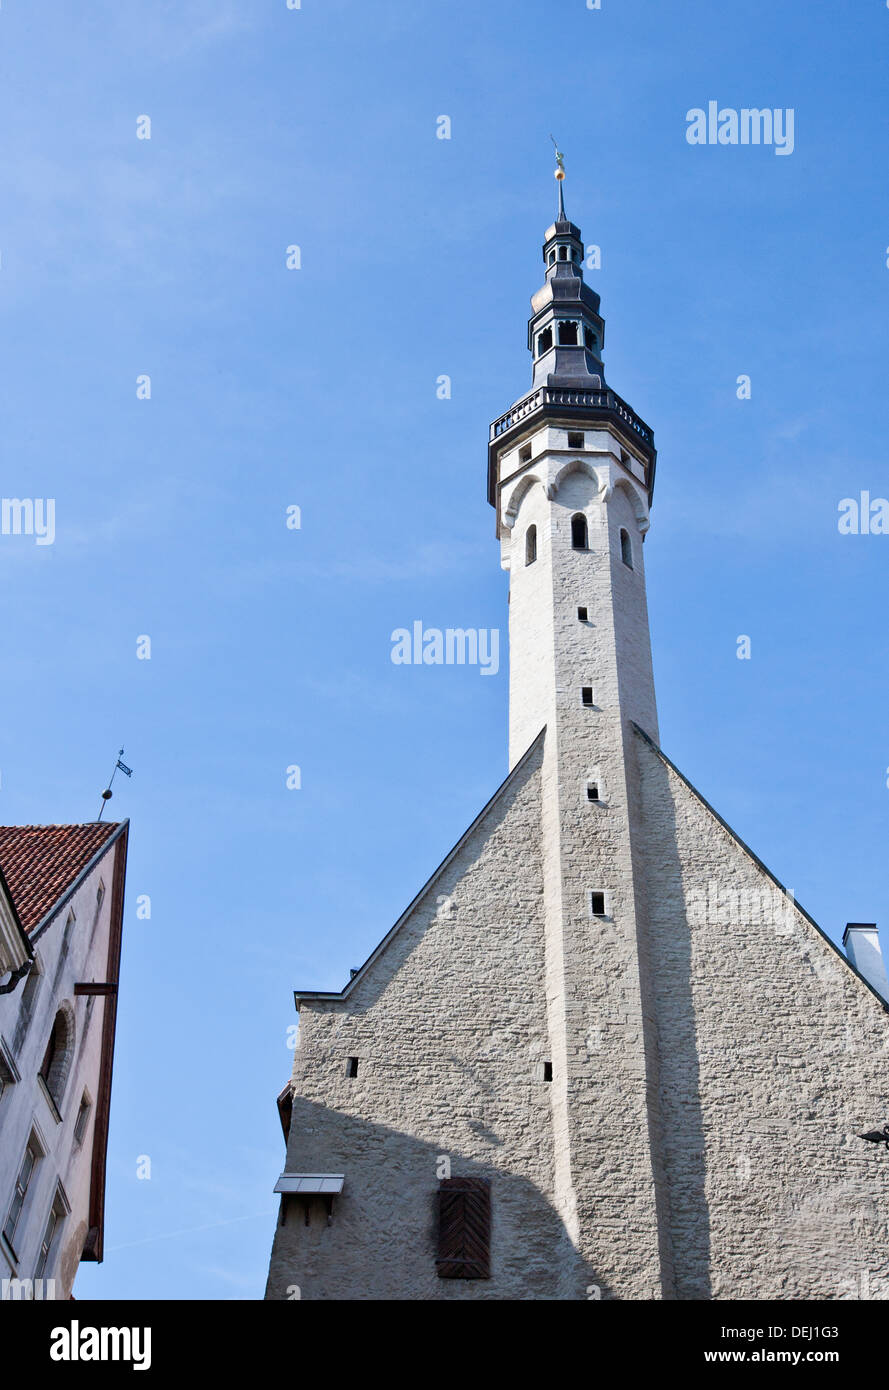 Buildings the Old Town Tallinn, Estonia Stock Photo